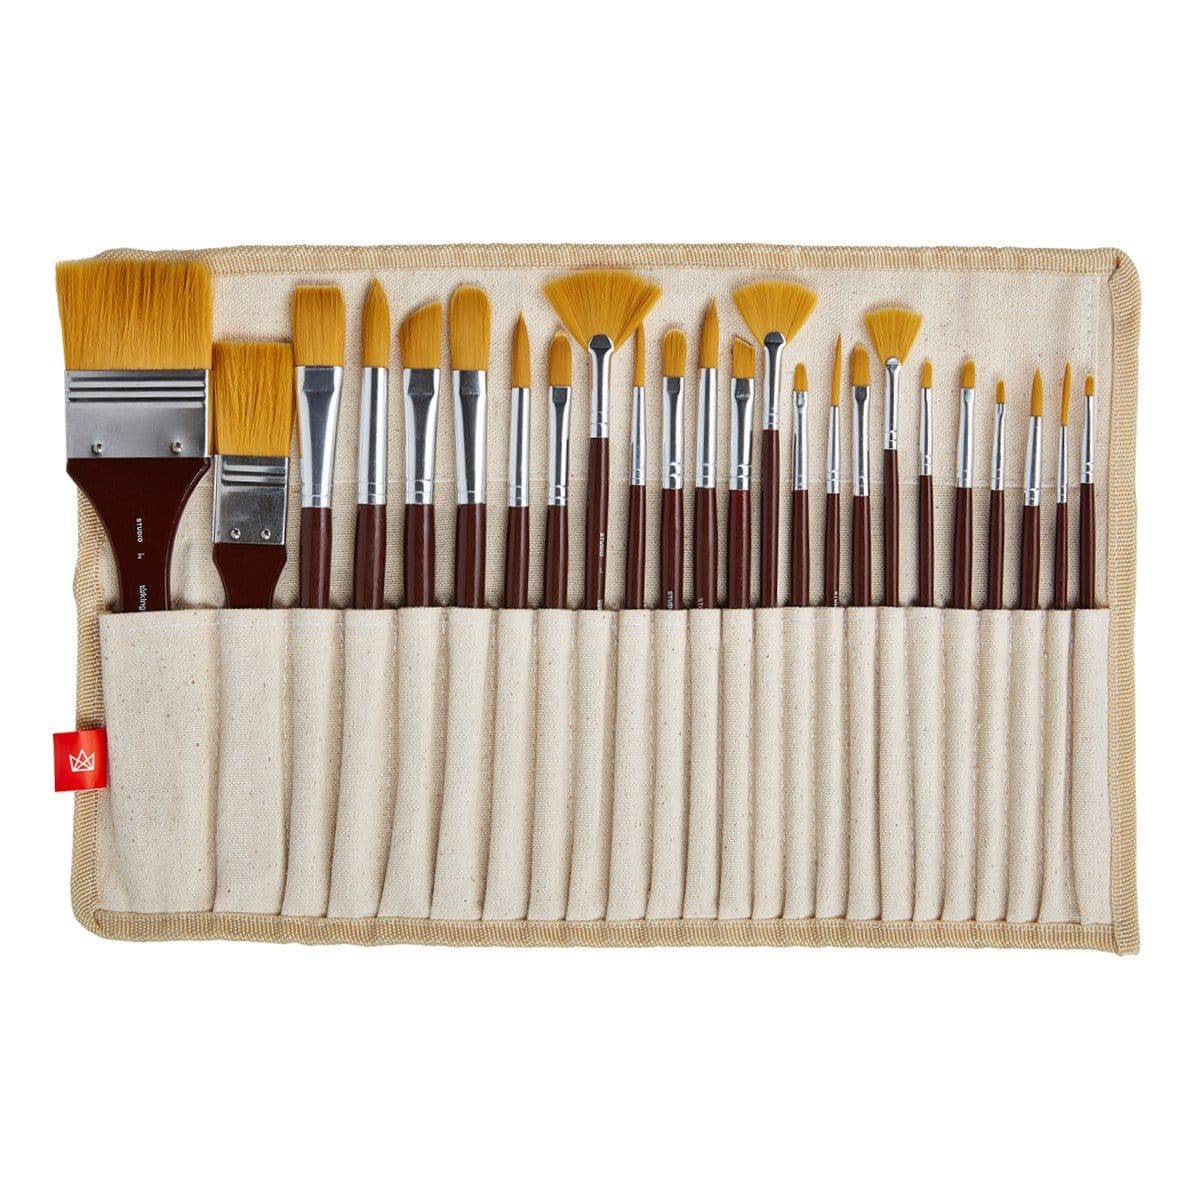 BUSOHA Roll Up Paint Brush Holder Artist Canvas Roll Pouch Bag